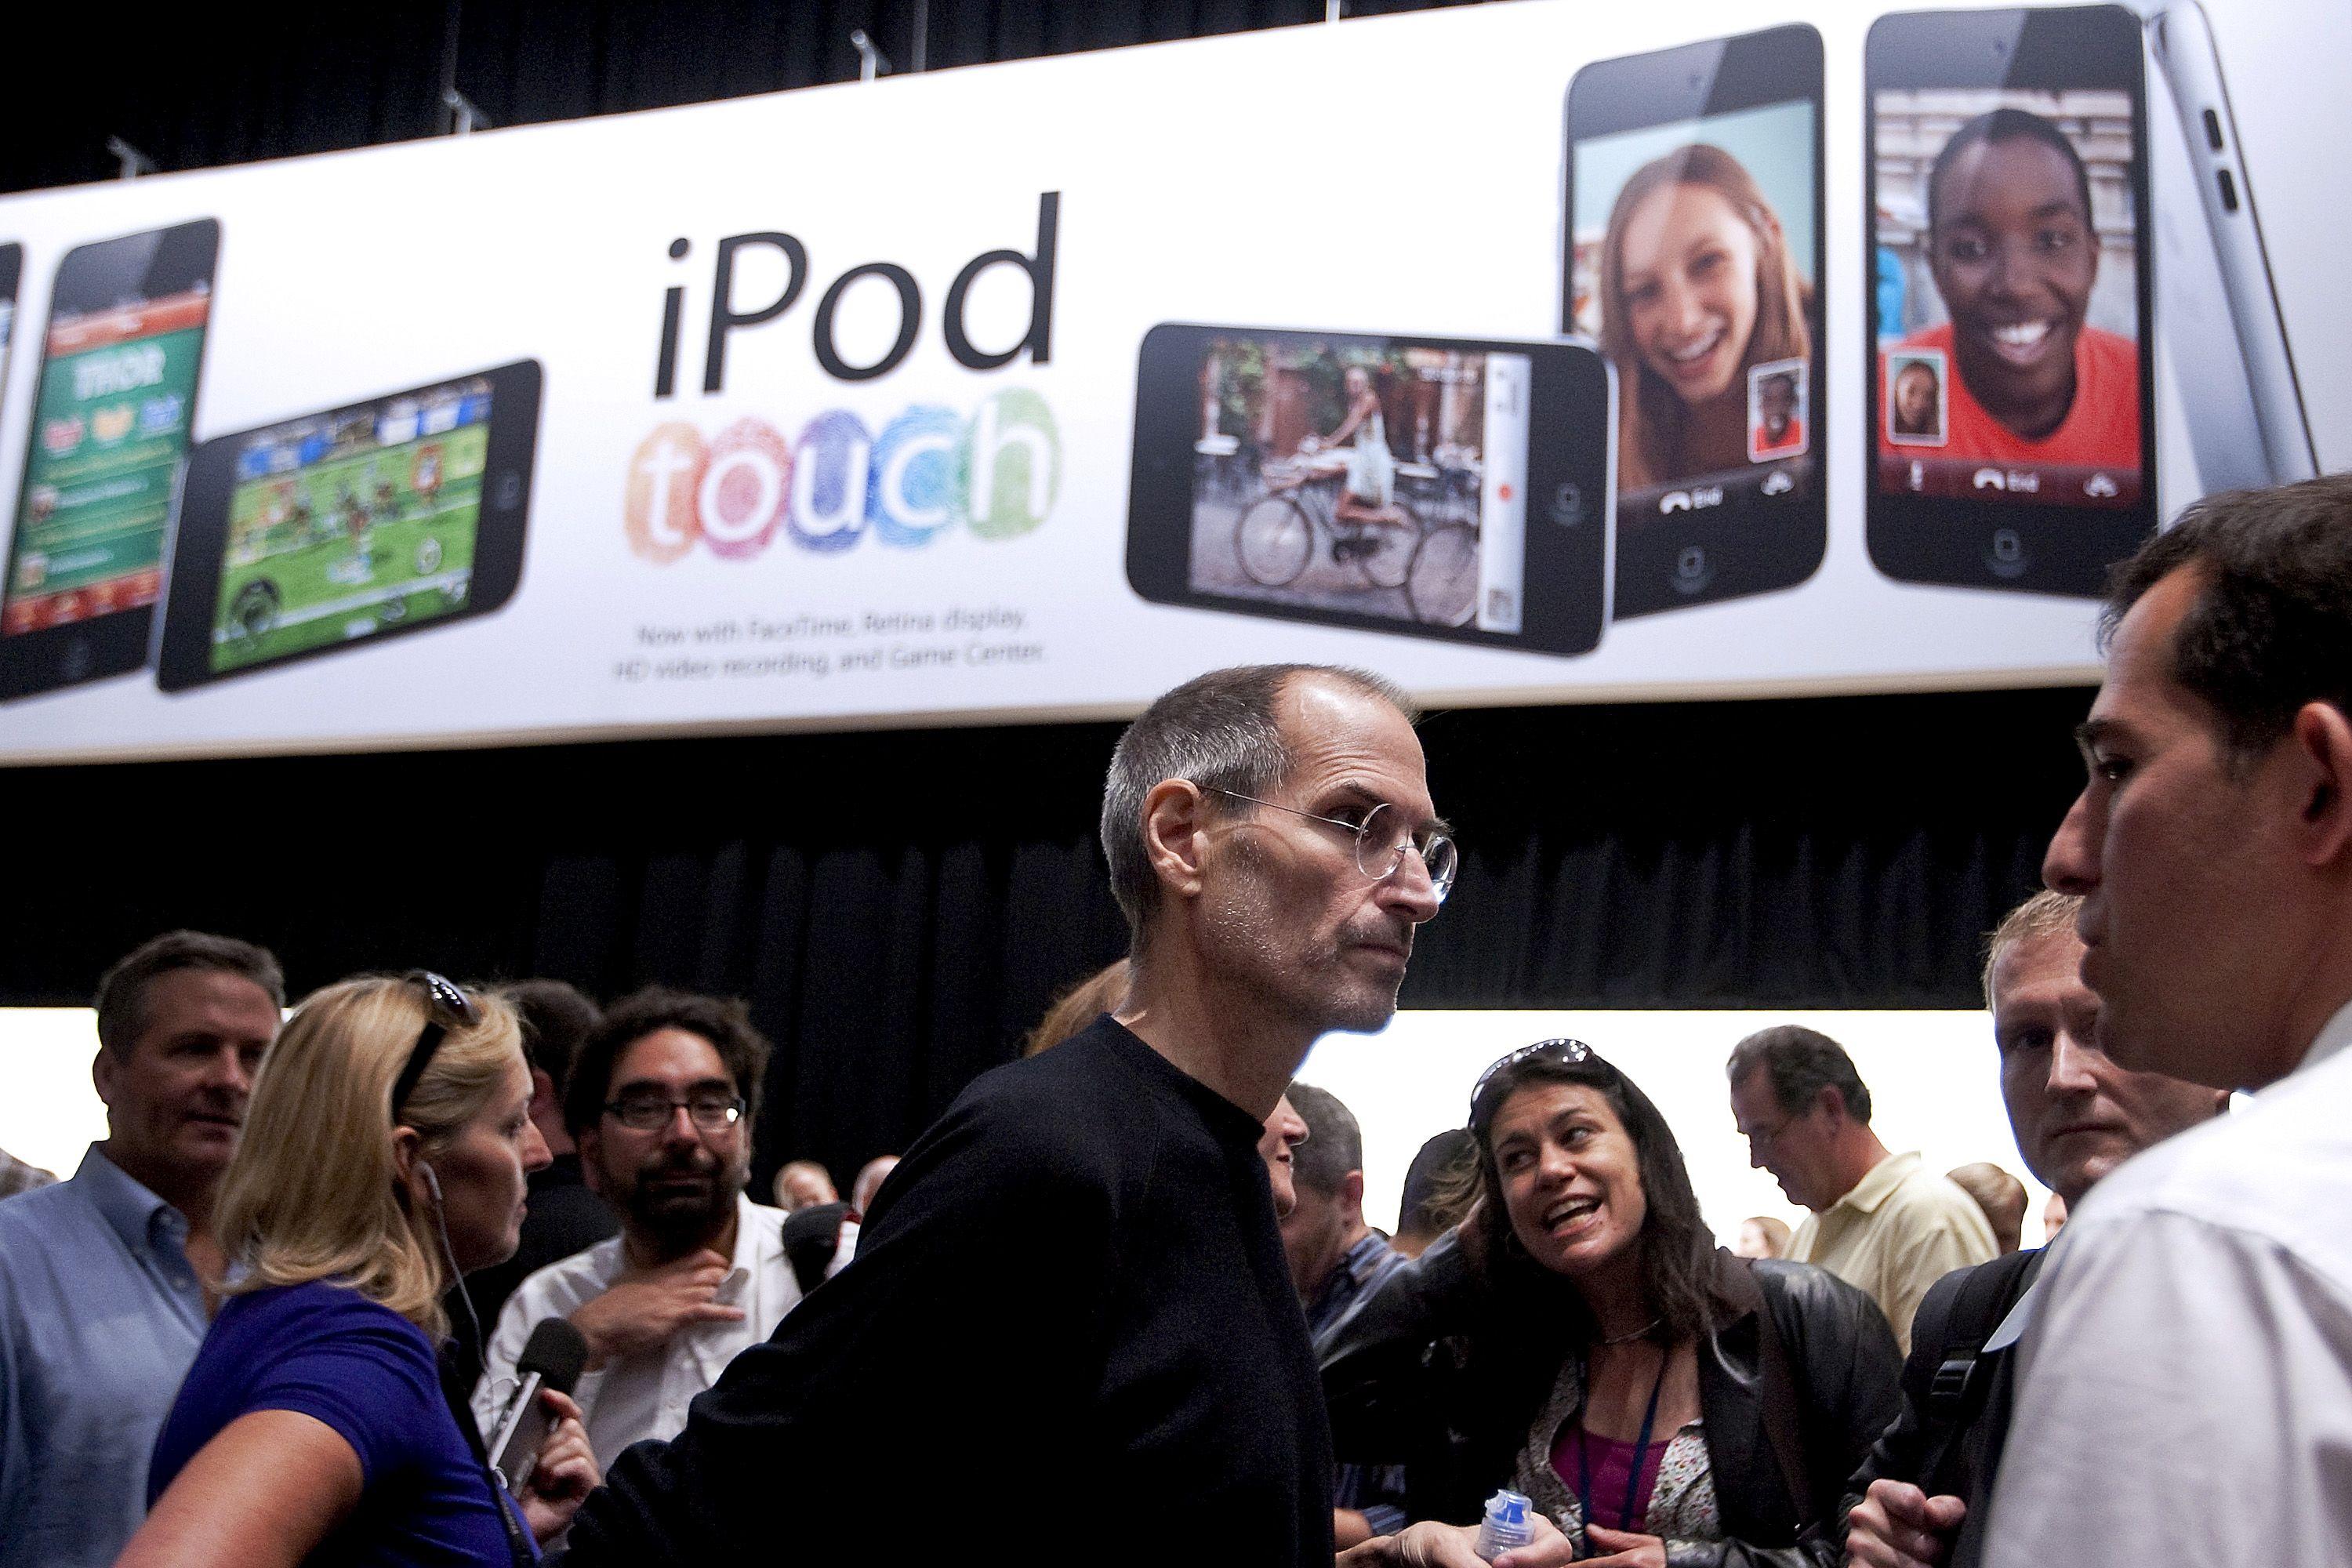 Steve Jobs App Store Logo - Steve Jobs Said the Apple Store Genius Bar Was 'So Idiotic' | Fortune